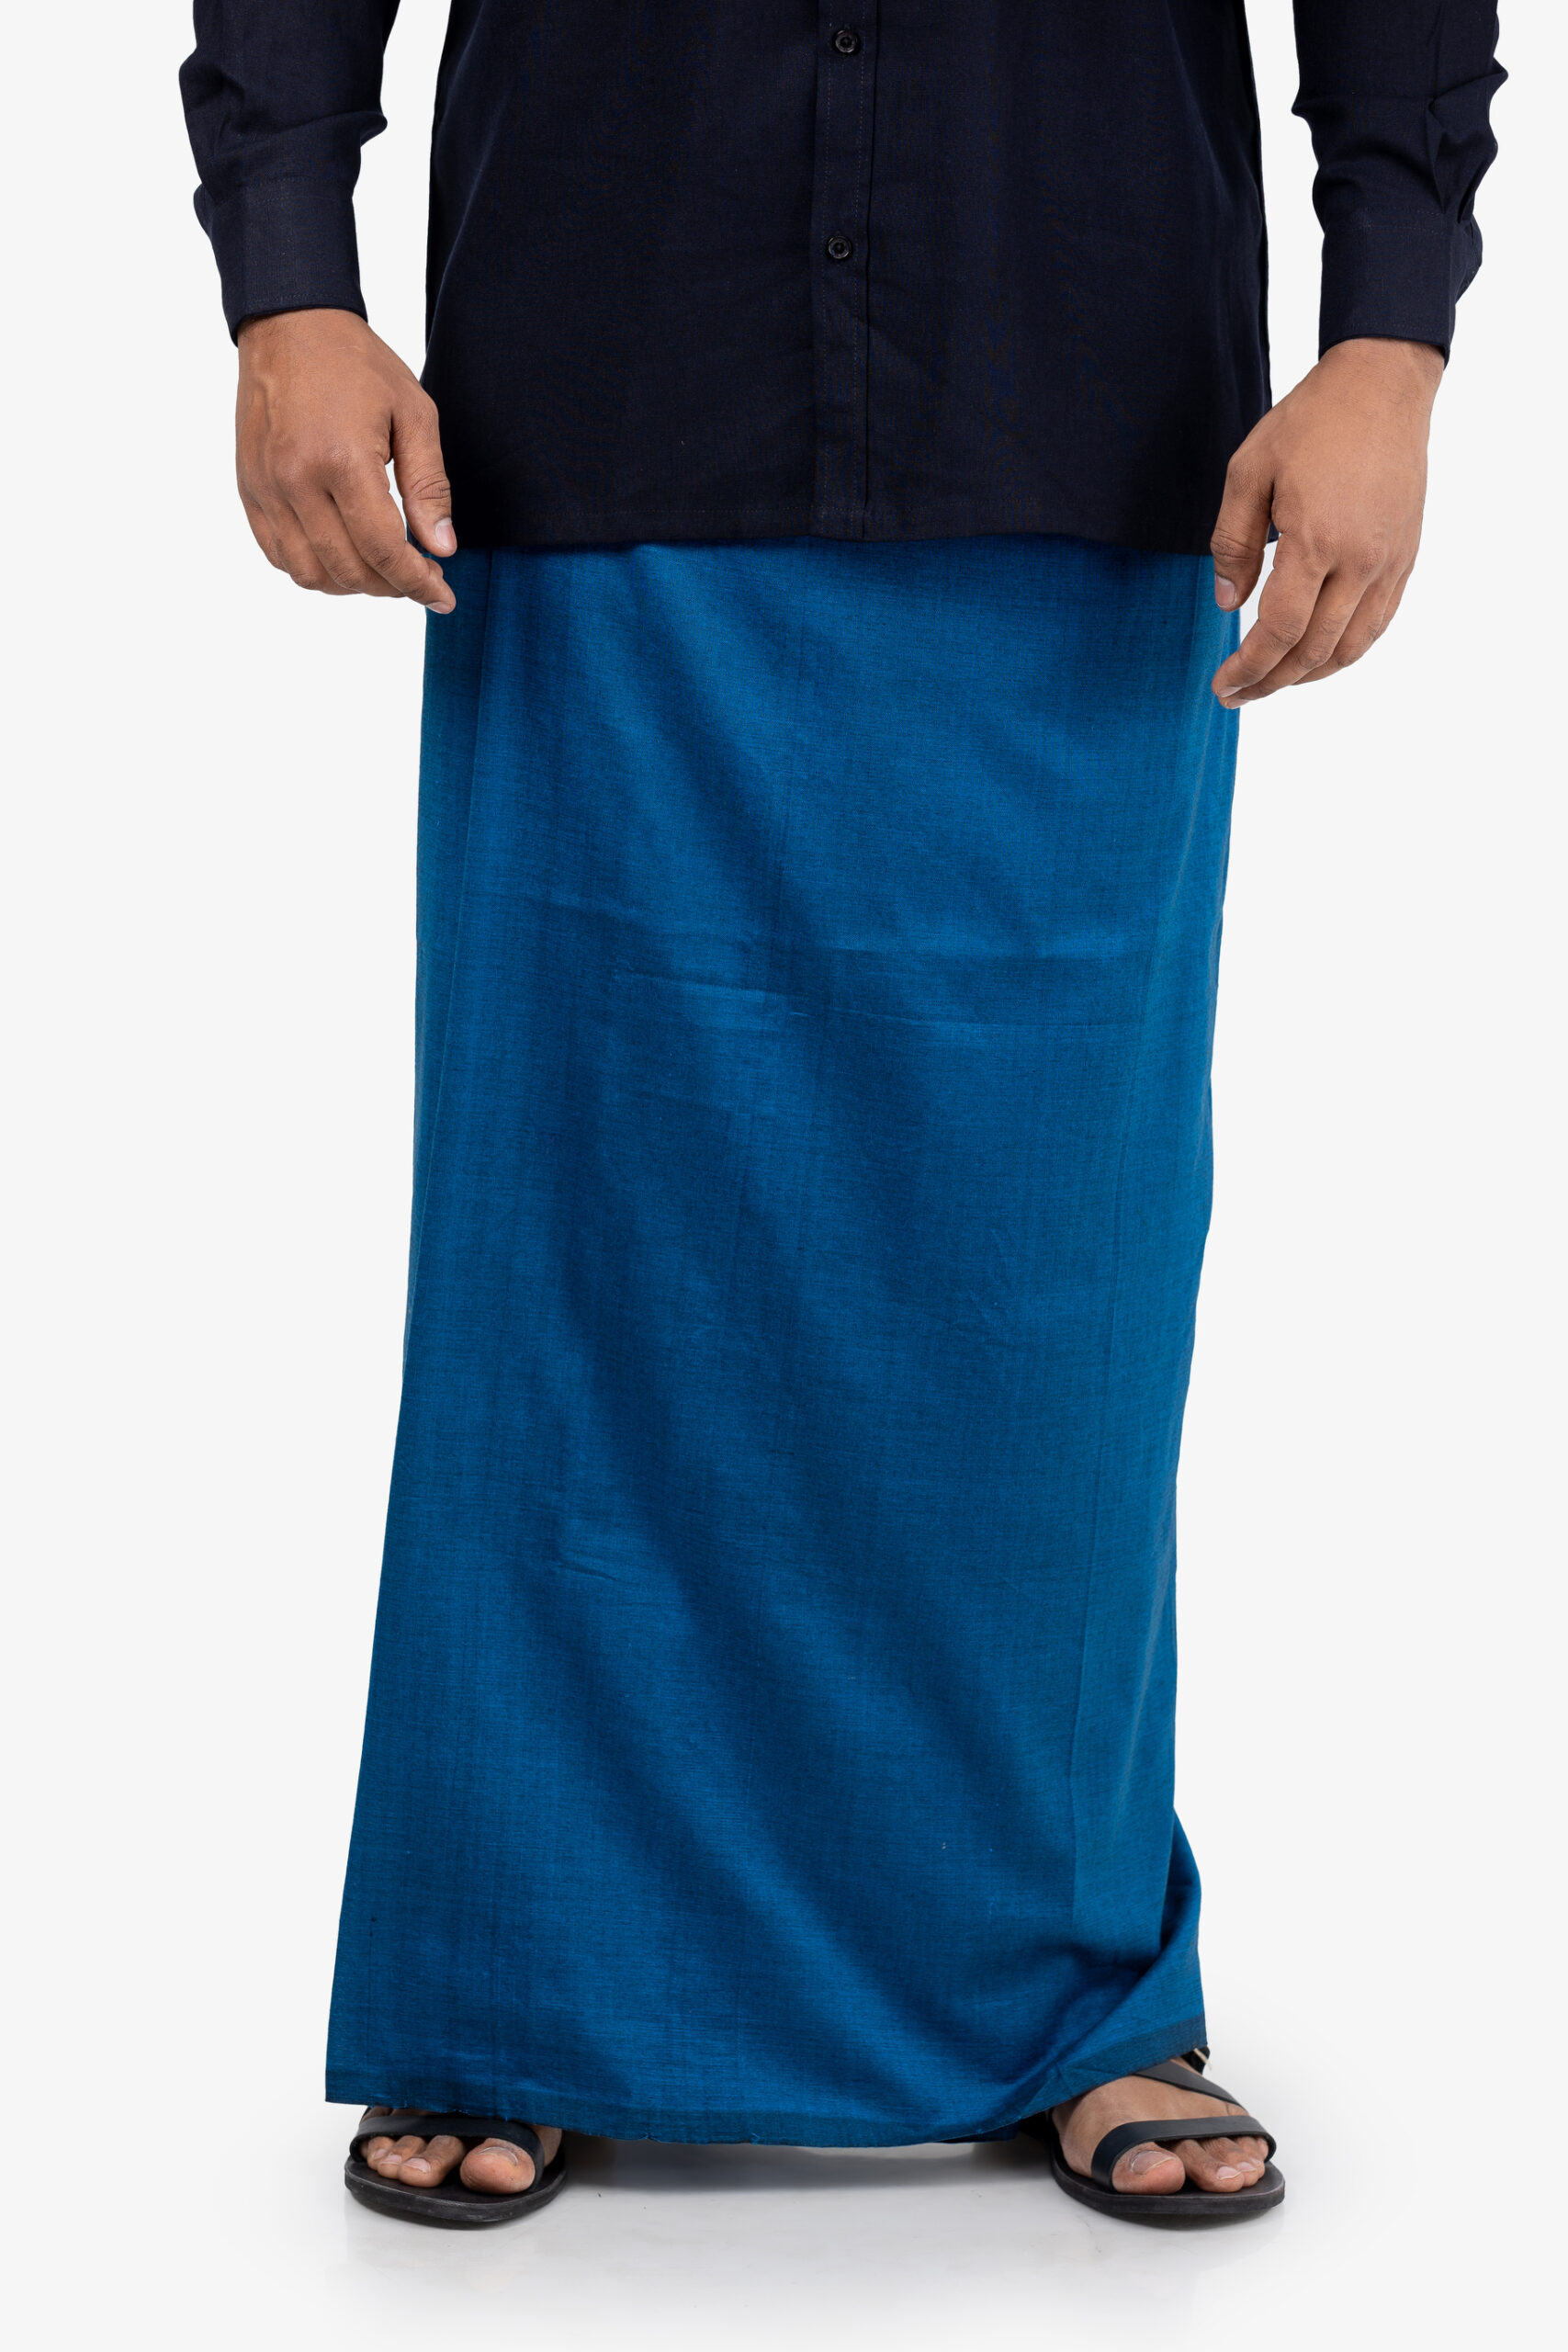 Handloom sarong - DoubleXL